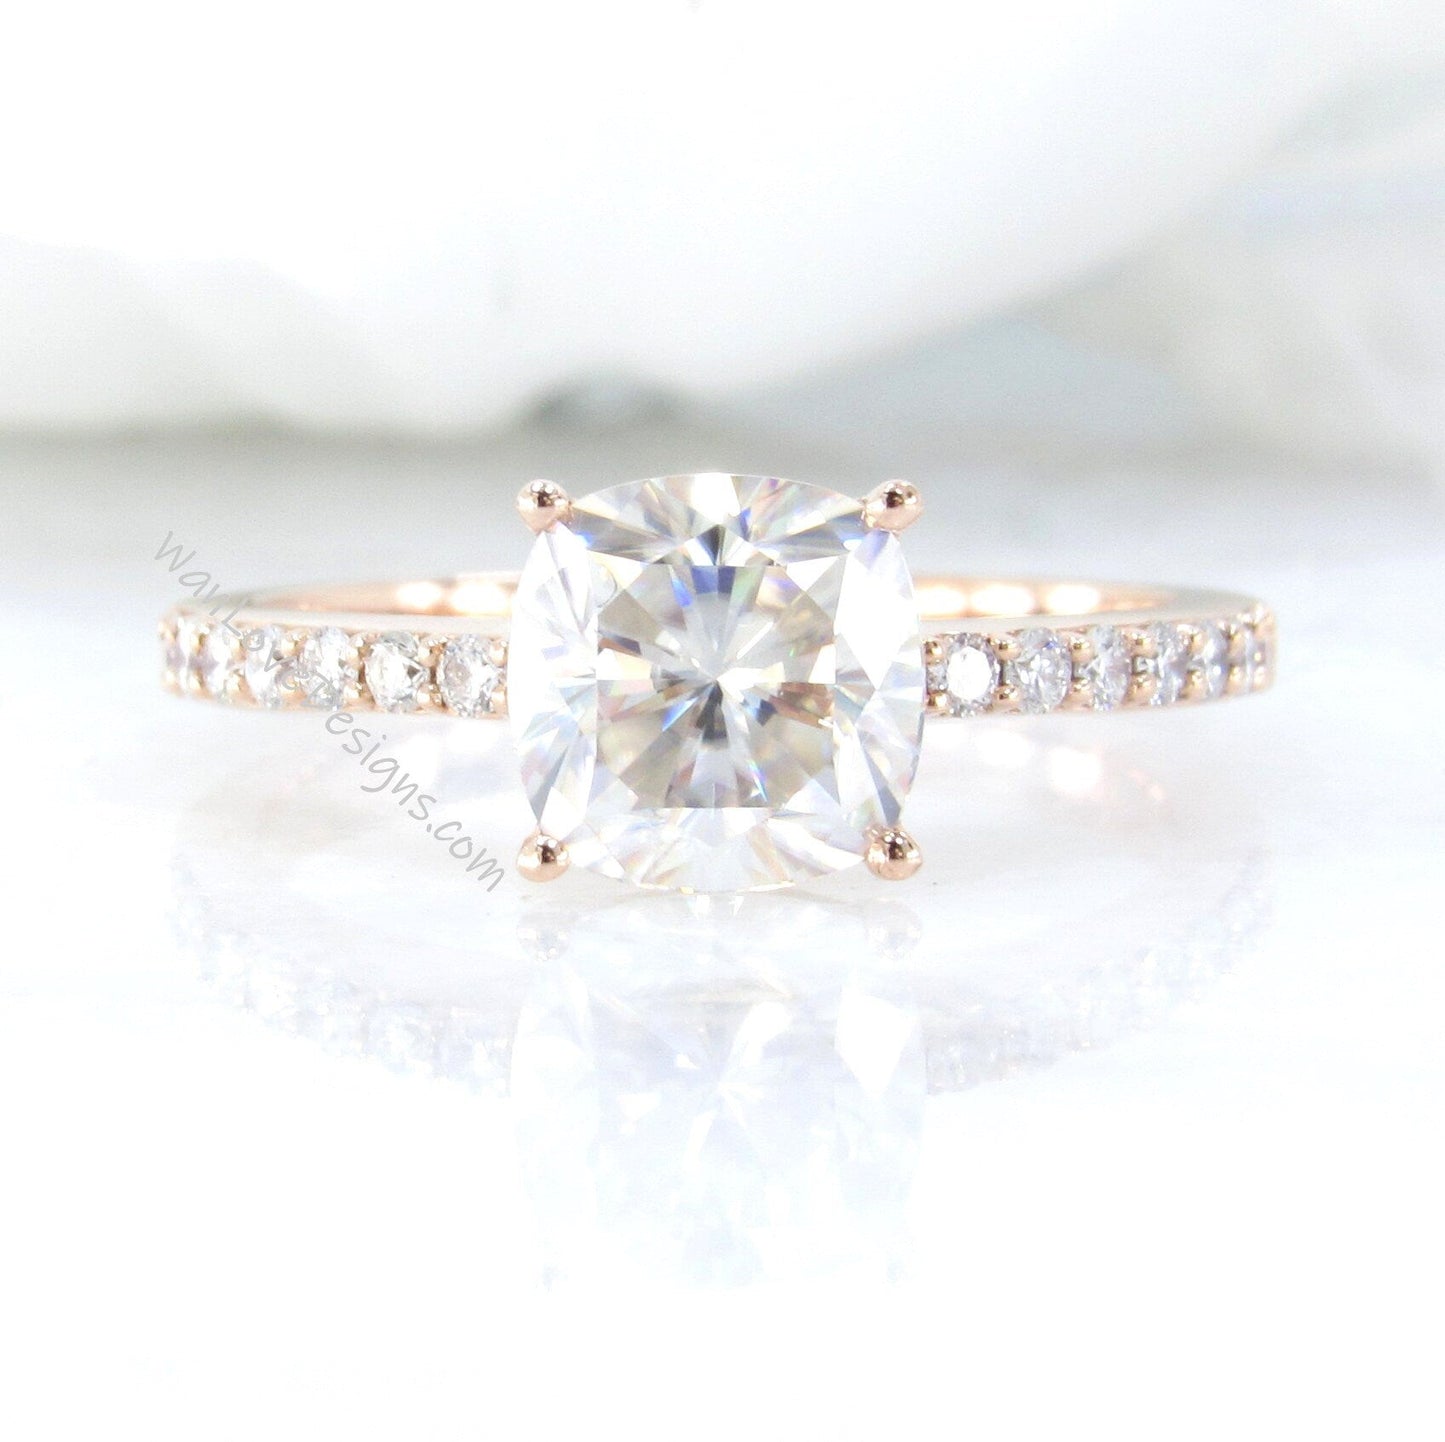 1.7ct Moissanite & Diamonds Cushion Low profile Engagement Ring, Cushion Moissanite Rose Gold Ring, Wedding Anniversary Gift-Ready to Ship Wan Love Designs